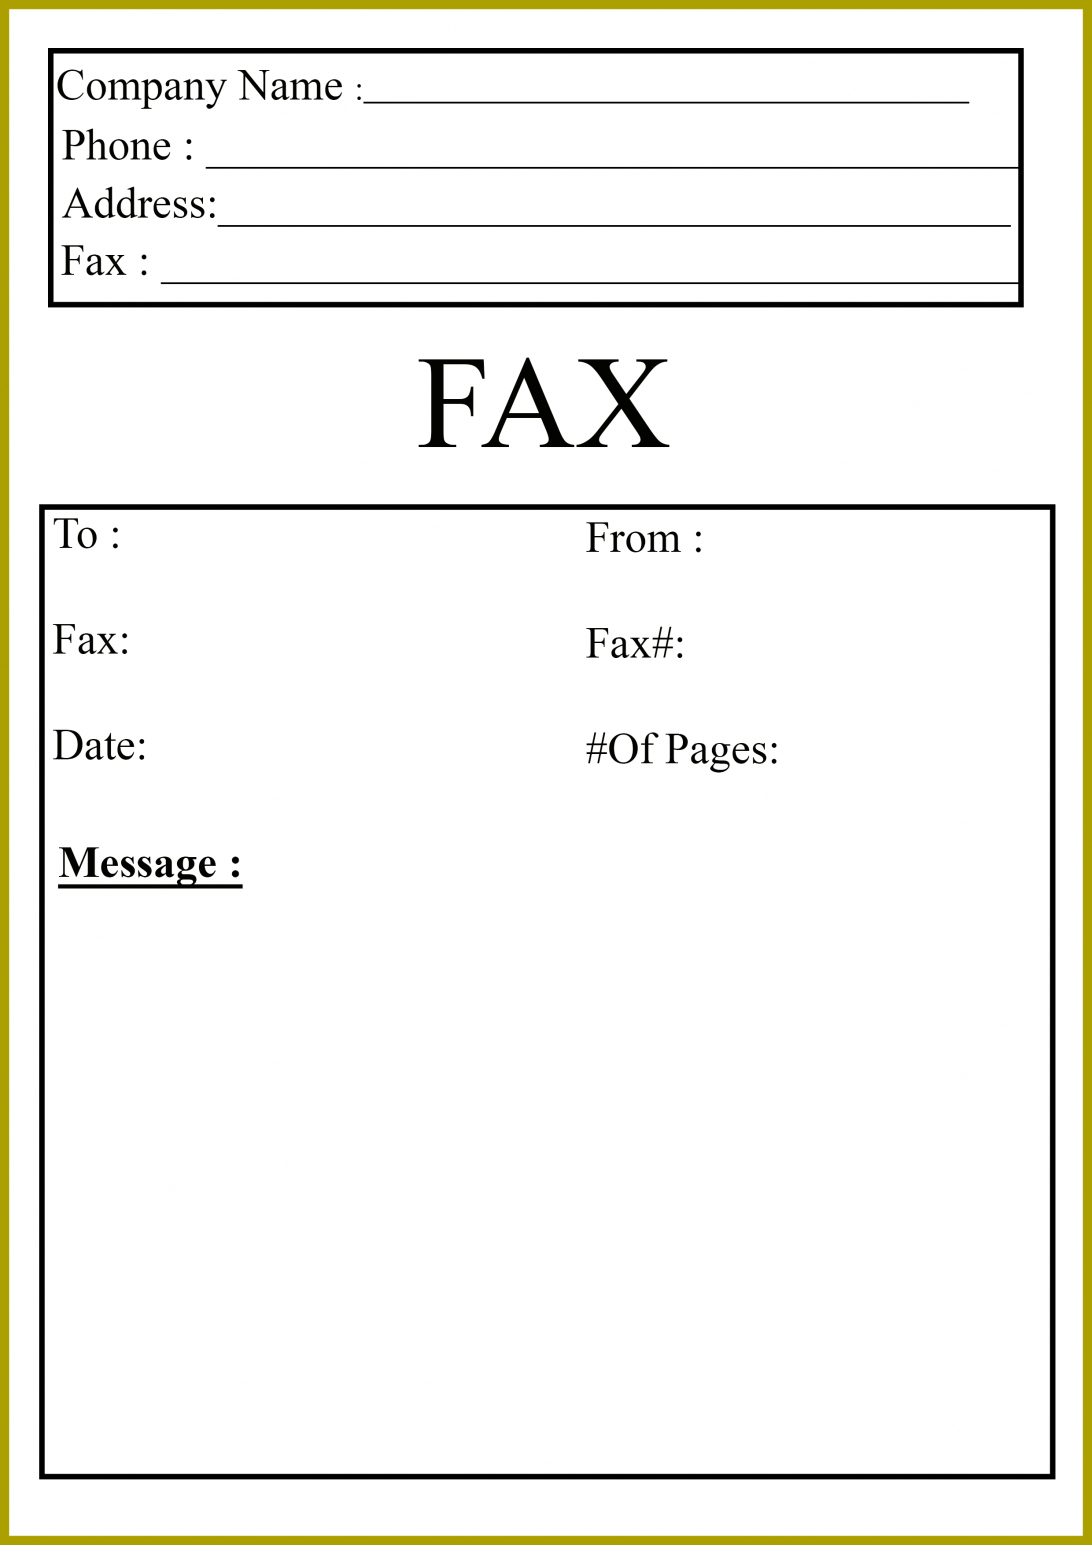 Fax Cover Sheet Pdf Free Google Docs Basic Template Word Throughout Fax Cover Sheet Template Word 2010